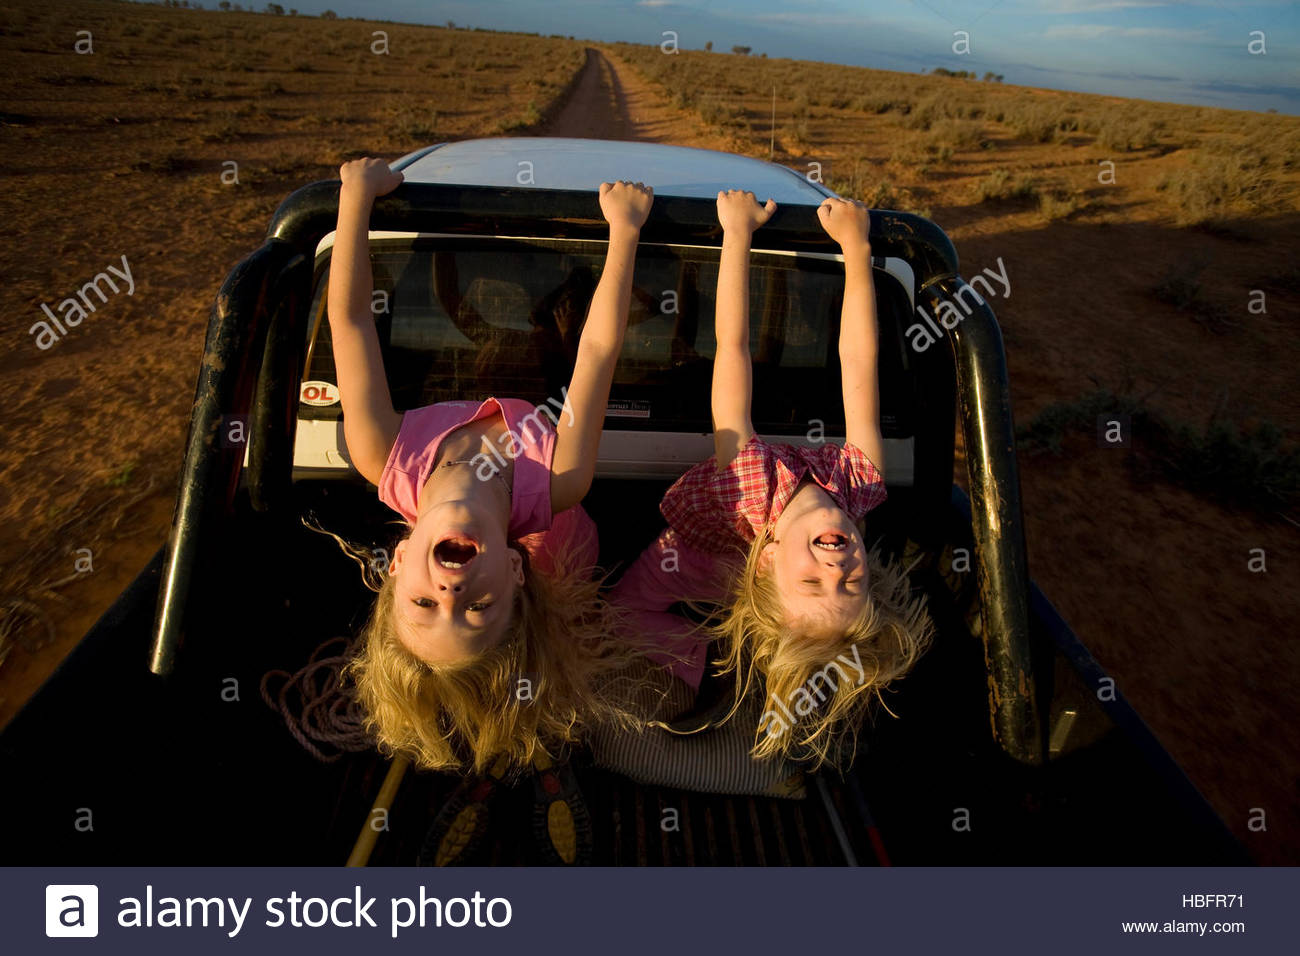 girls ride on truck